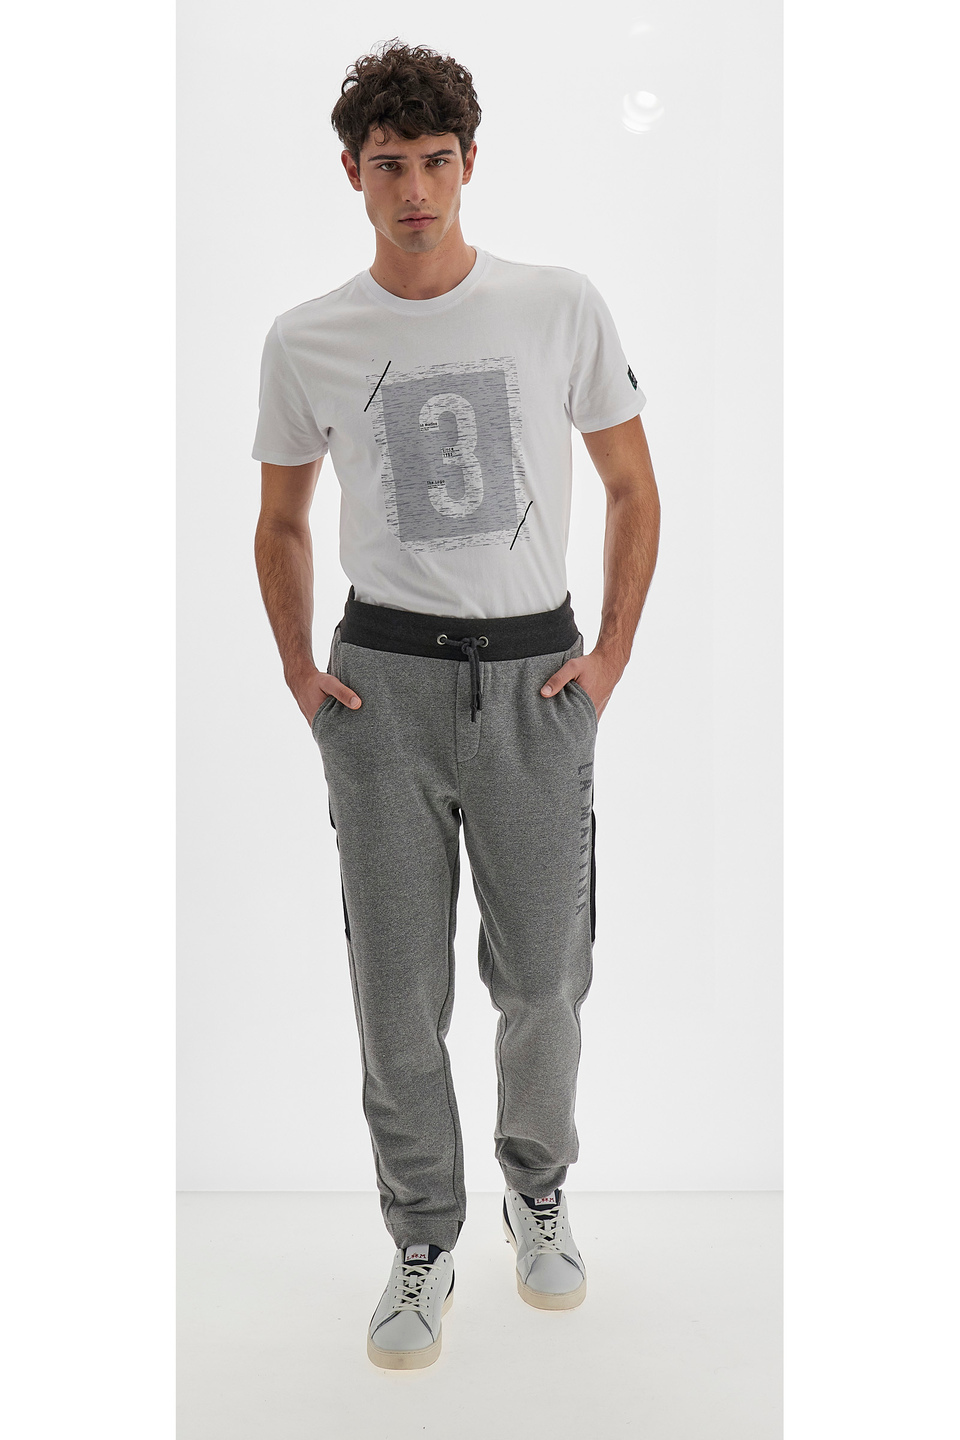 Pantalone jogger cotone misto uomo con cordino Logos - Videlio | La Martina - Official Online Shop